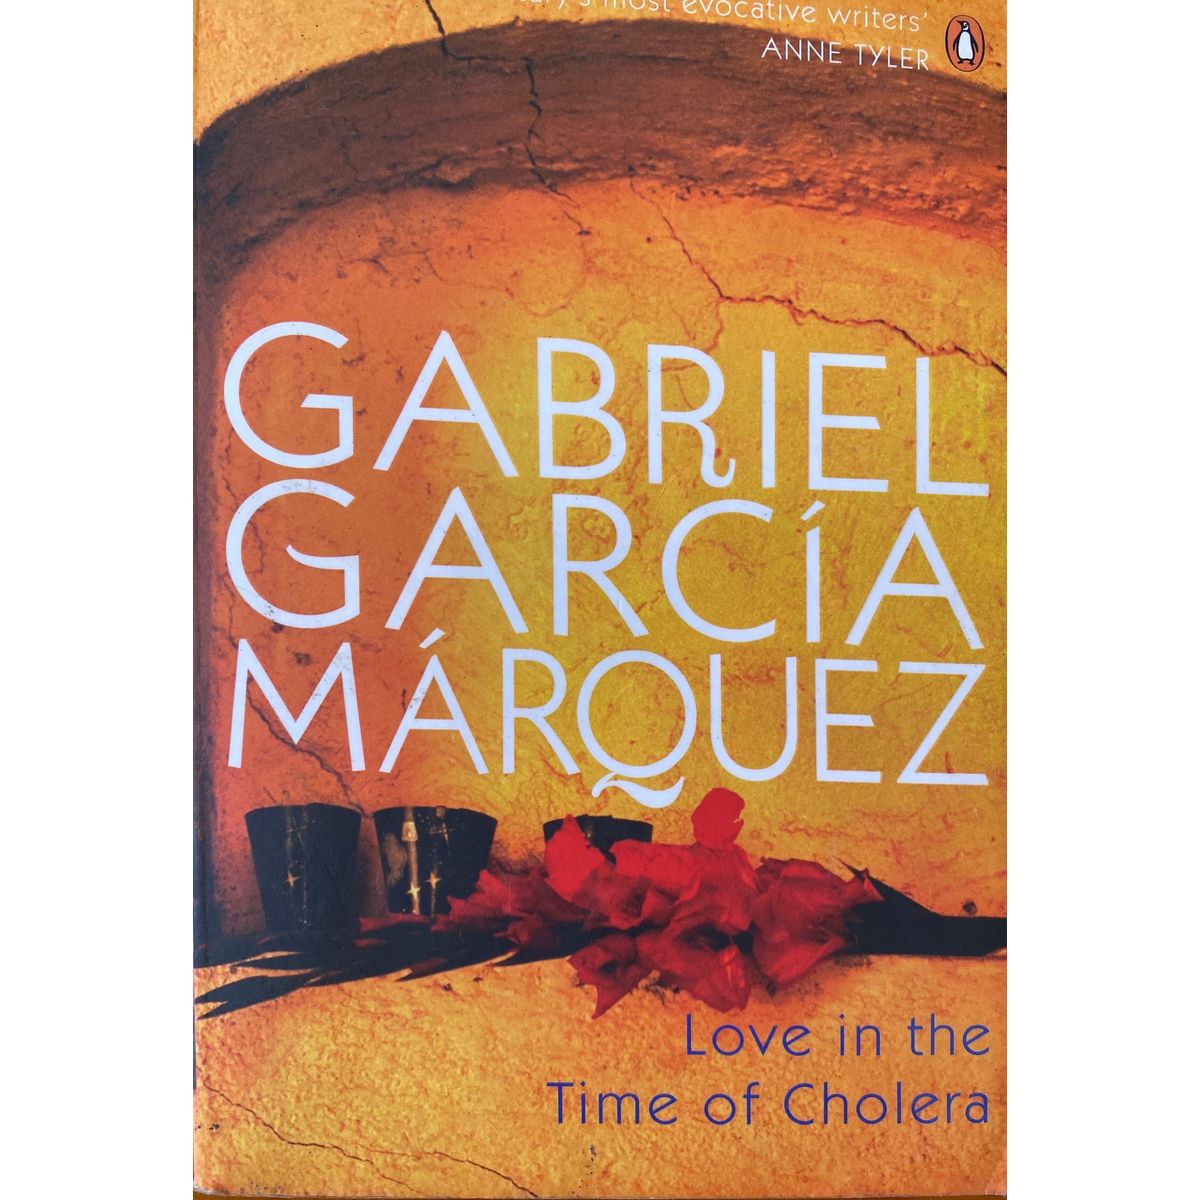 ISBN: 9780141032429 / 0141032421 - Love in the Time of Cholera by Gabriel García Márquez [2007]